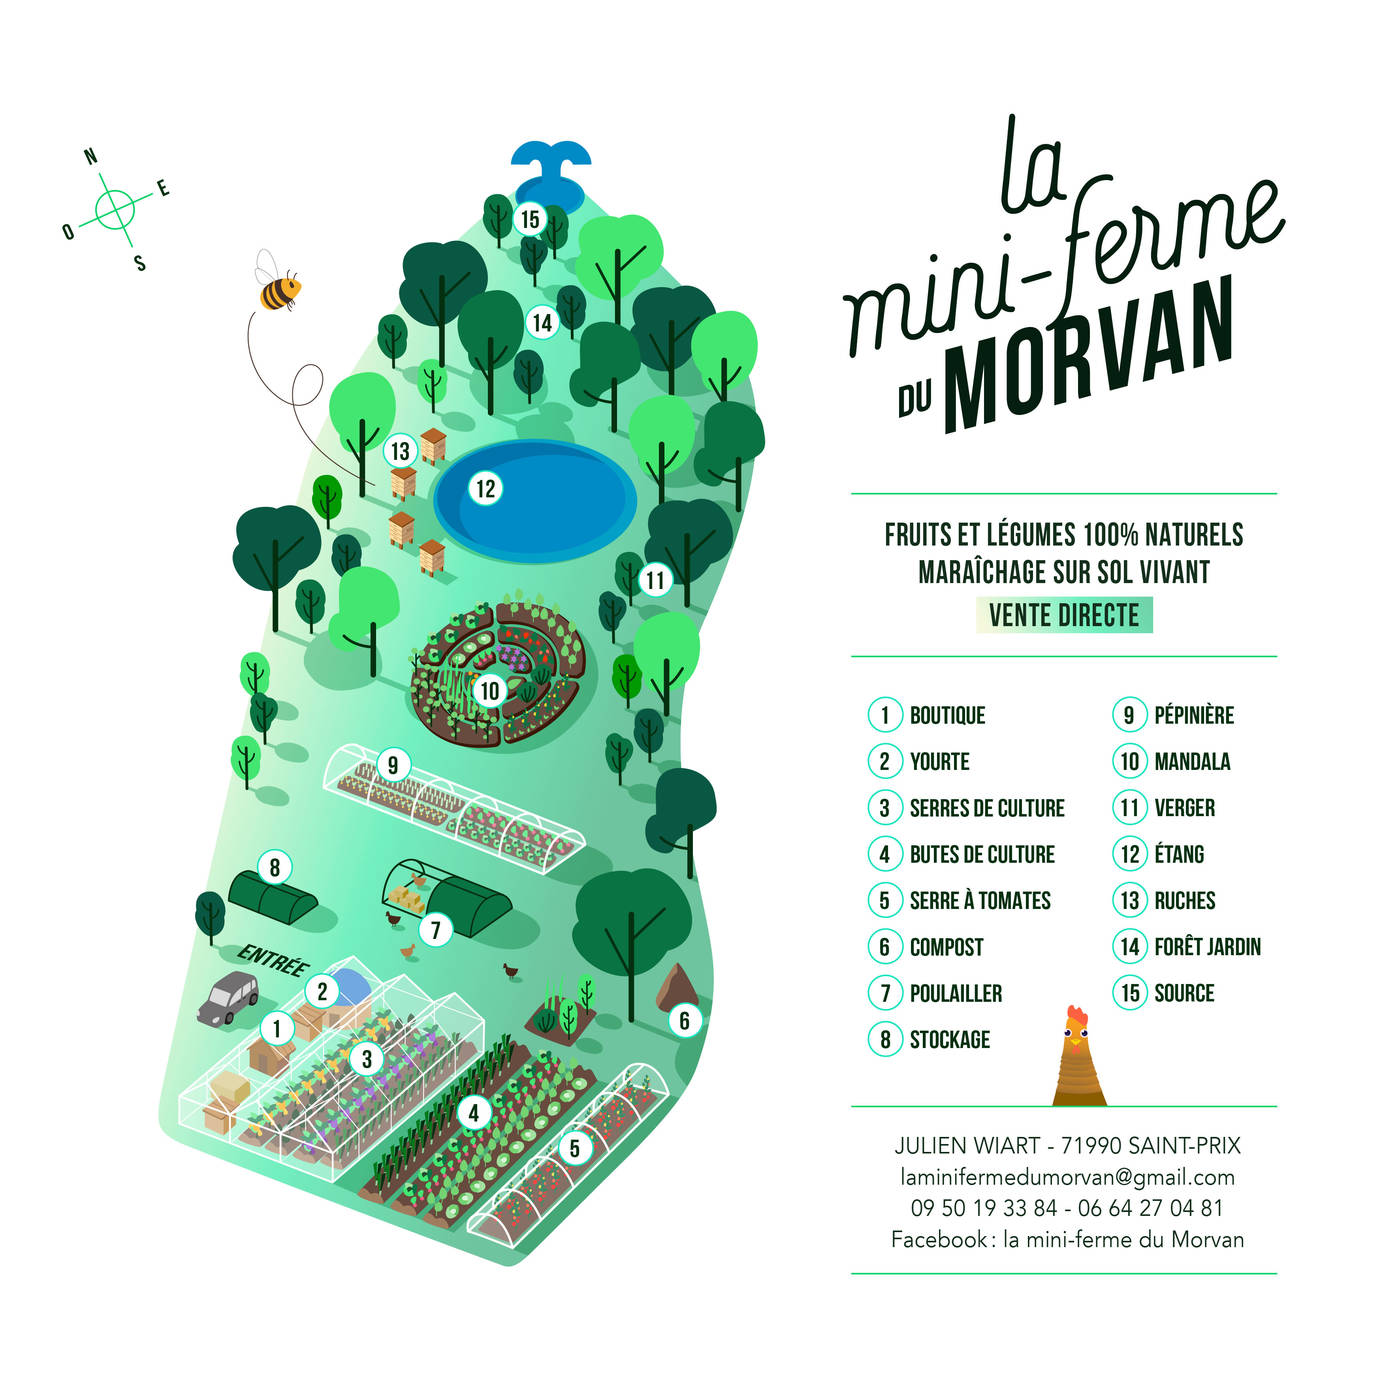 La mini-ferme du Morvan